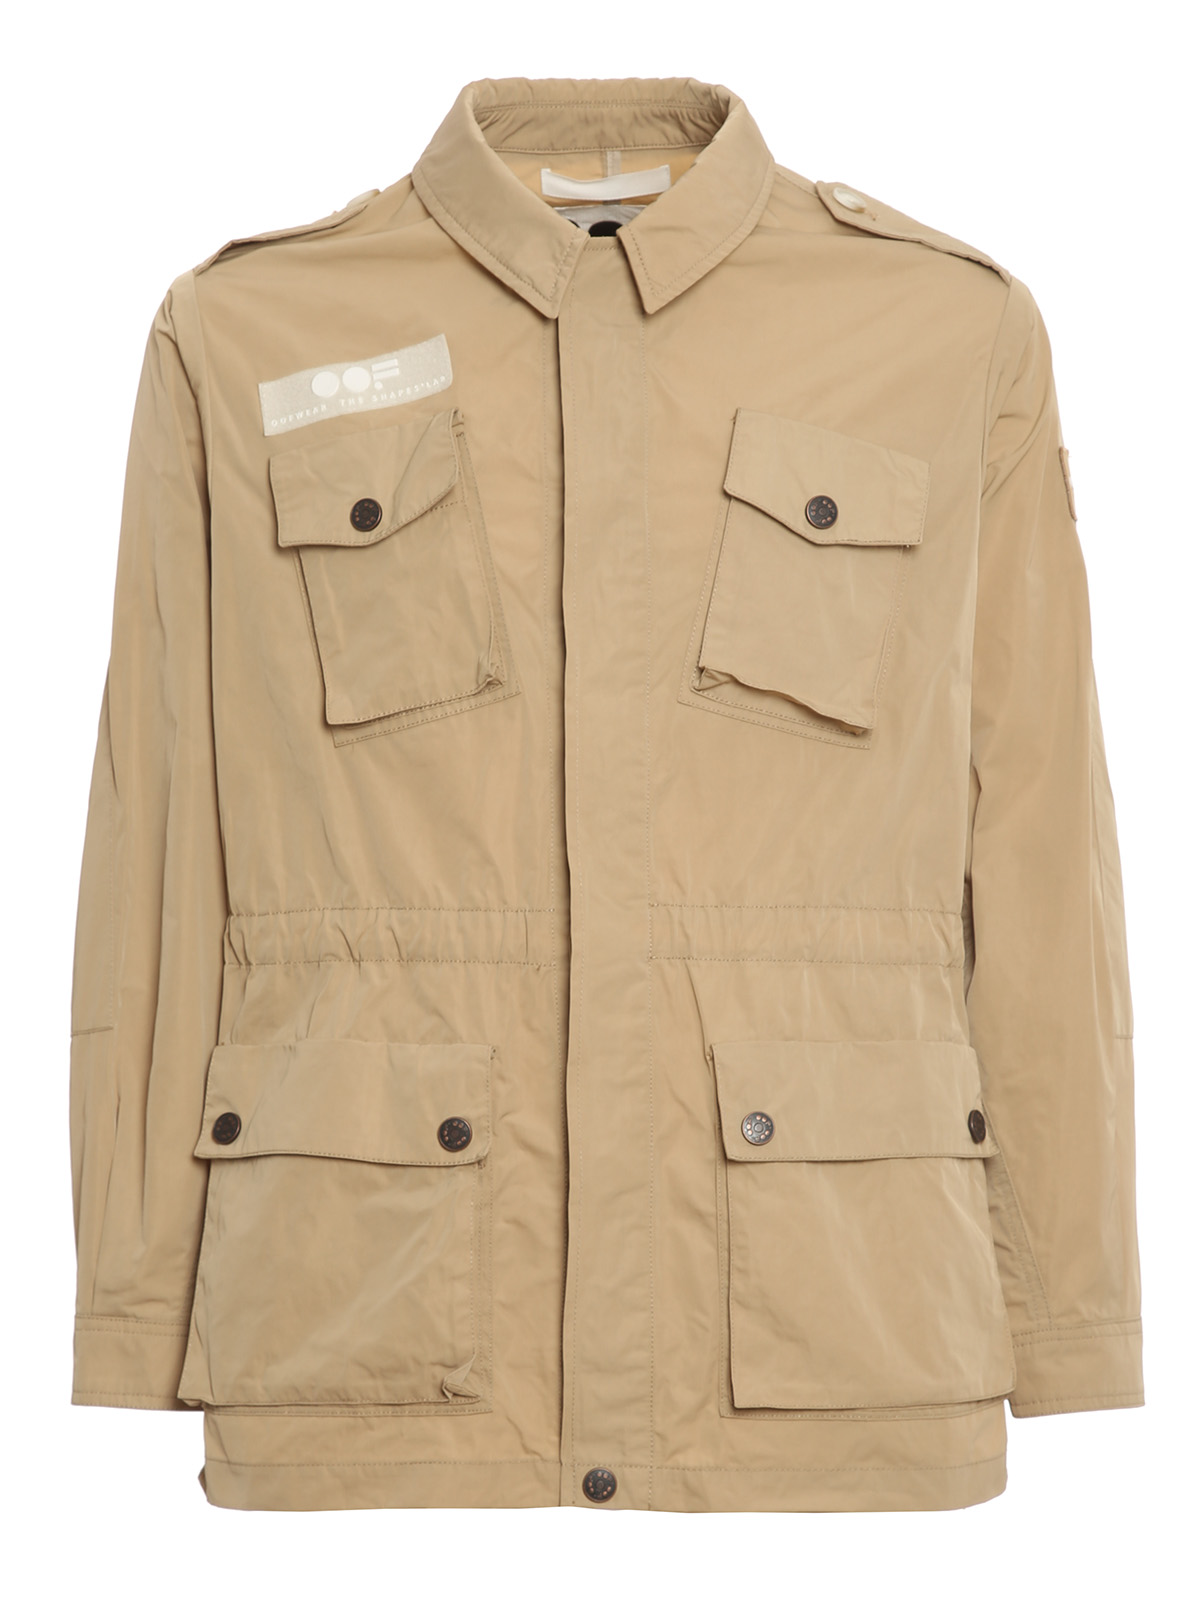 Casual jackets OOF Wear - Tech fabric jacket - SR0612 | iKRIX.com